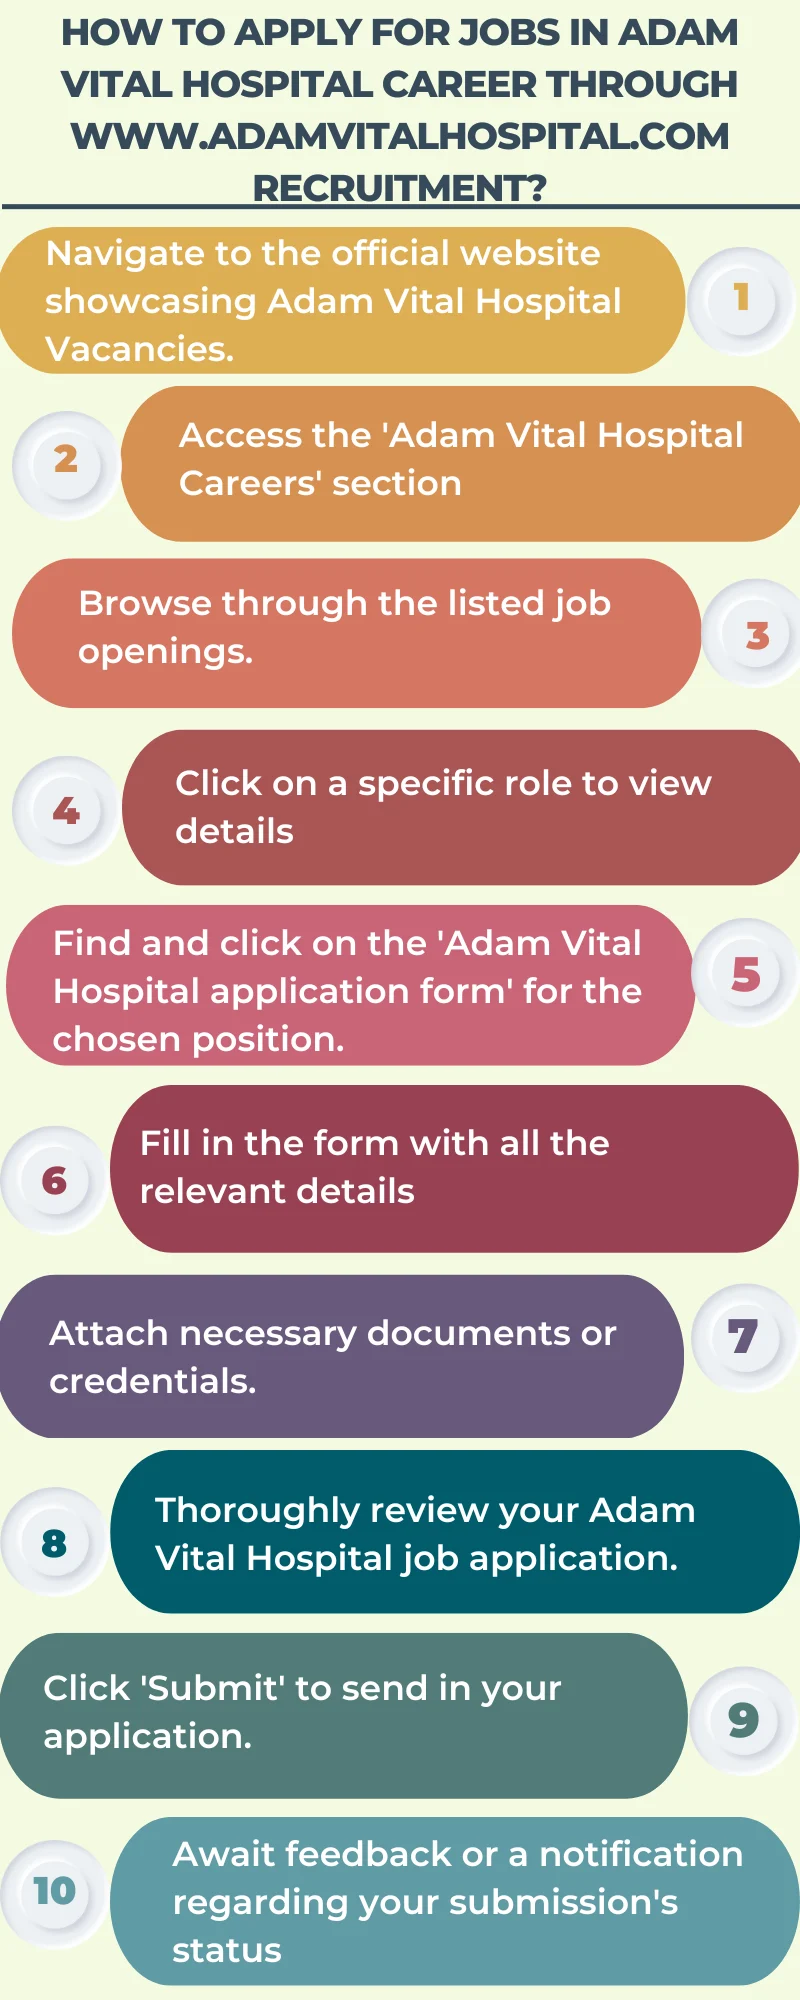 How to Apply for Jobs in Adam Vital Hospital Career through www.adamvitalhospital.com recruitment?